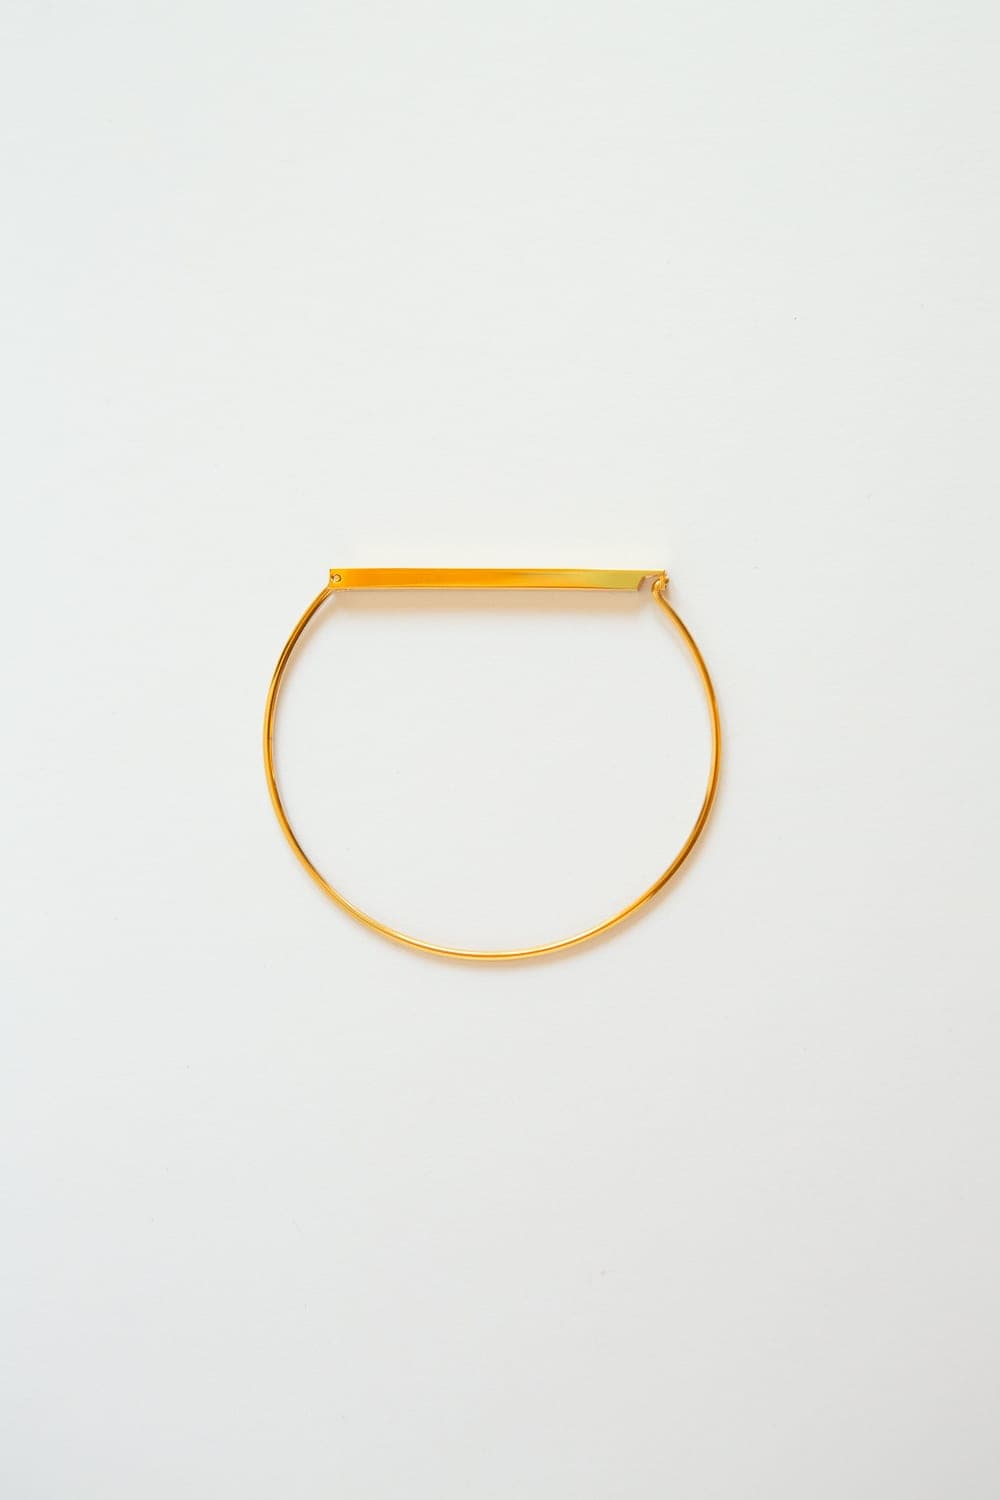 Minimalist Dainty Gold Bar Bracelet